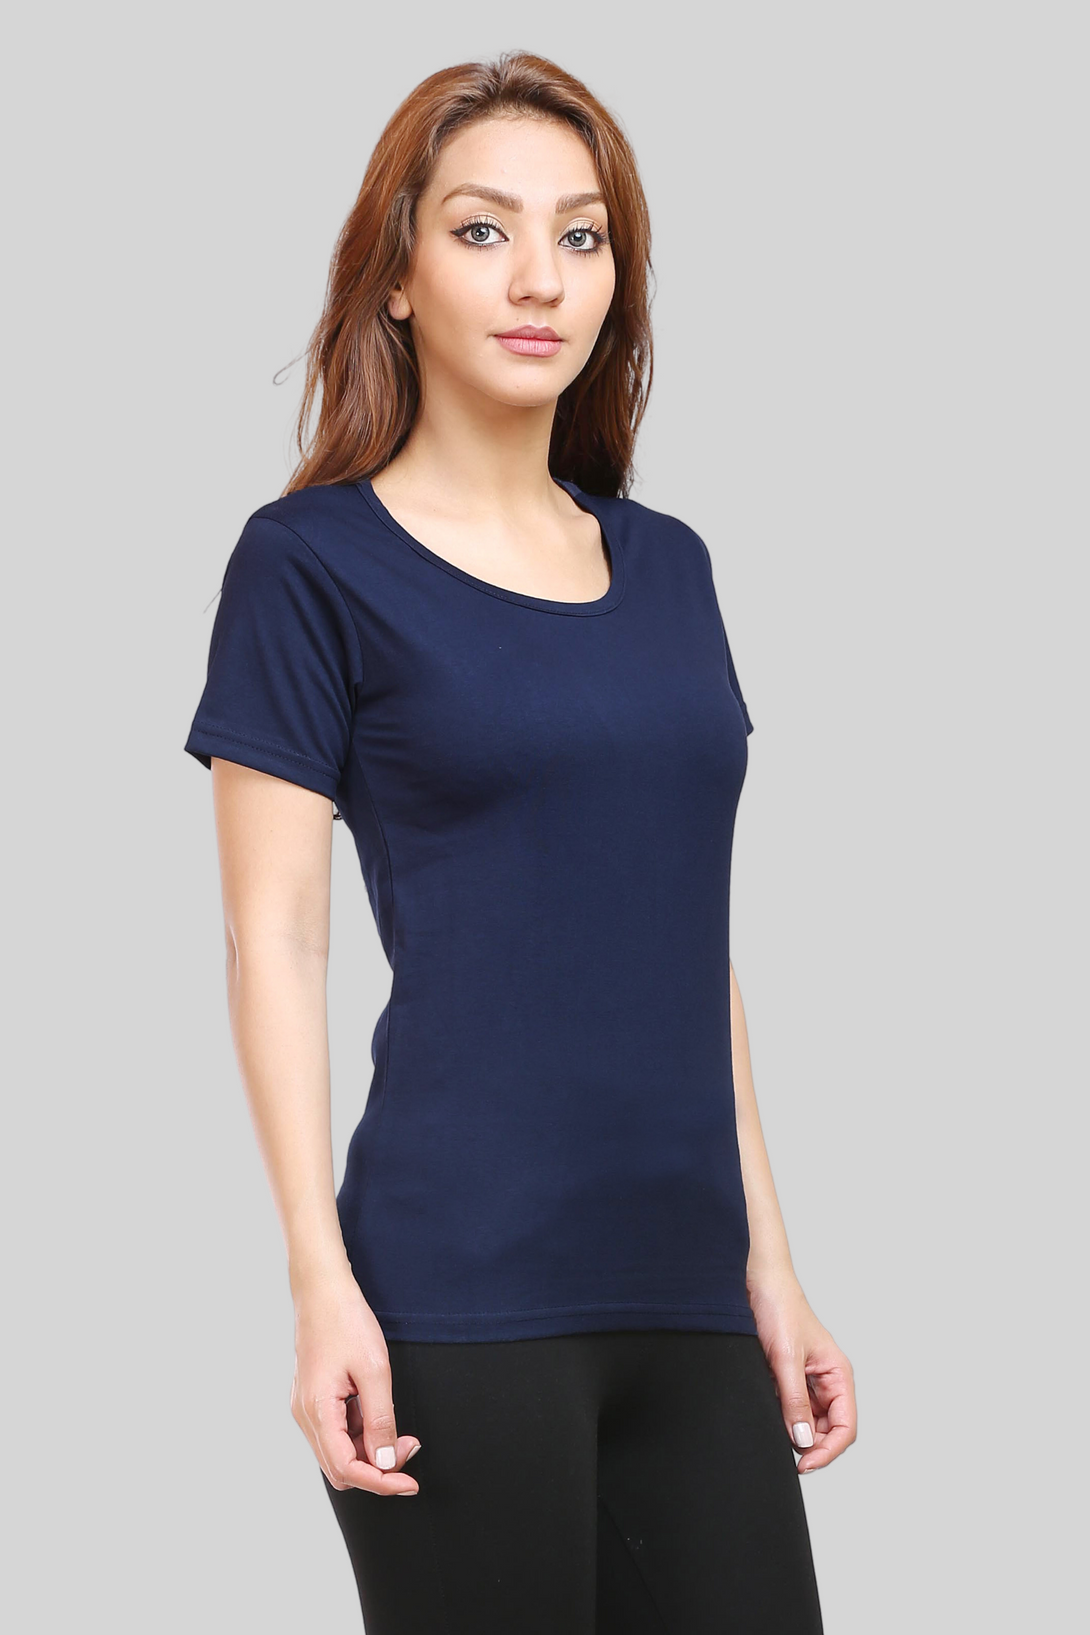 Navy Blue Scoop Neck T-Shirt For Women - WowWaves - 1